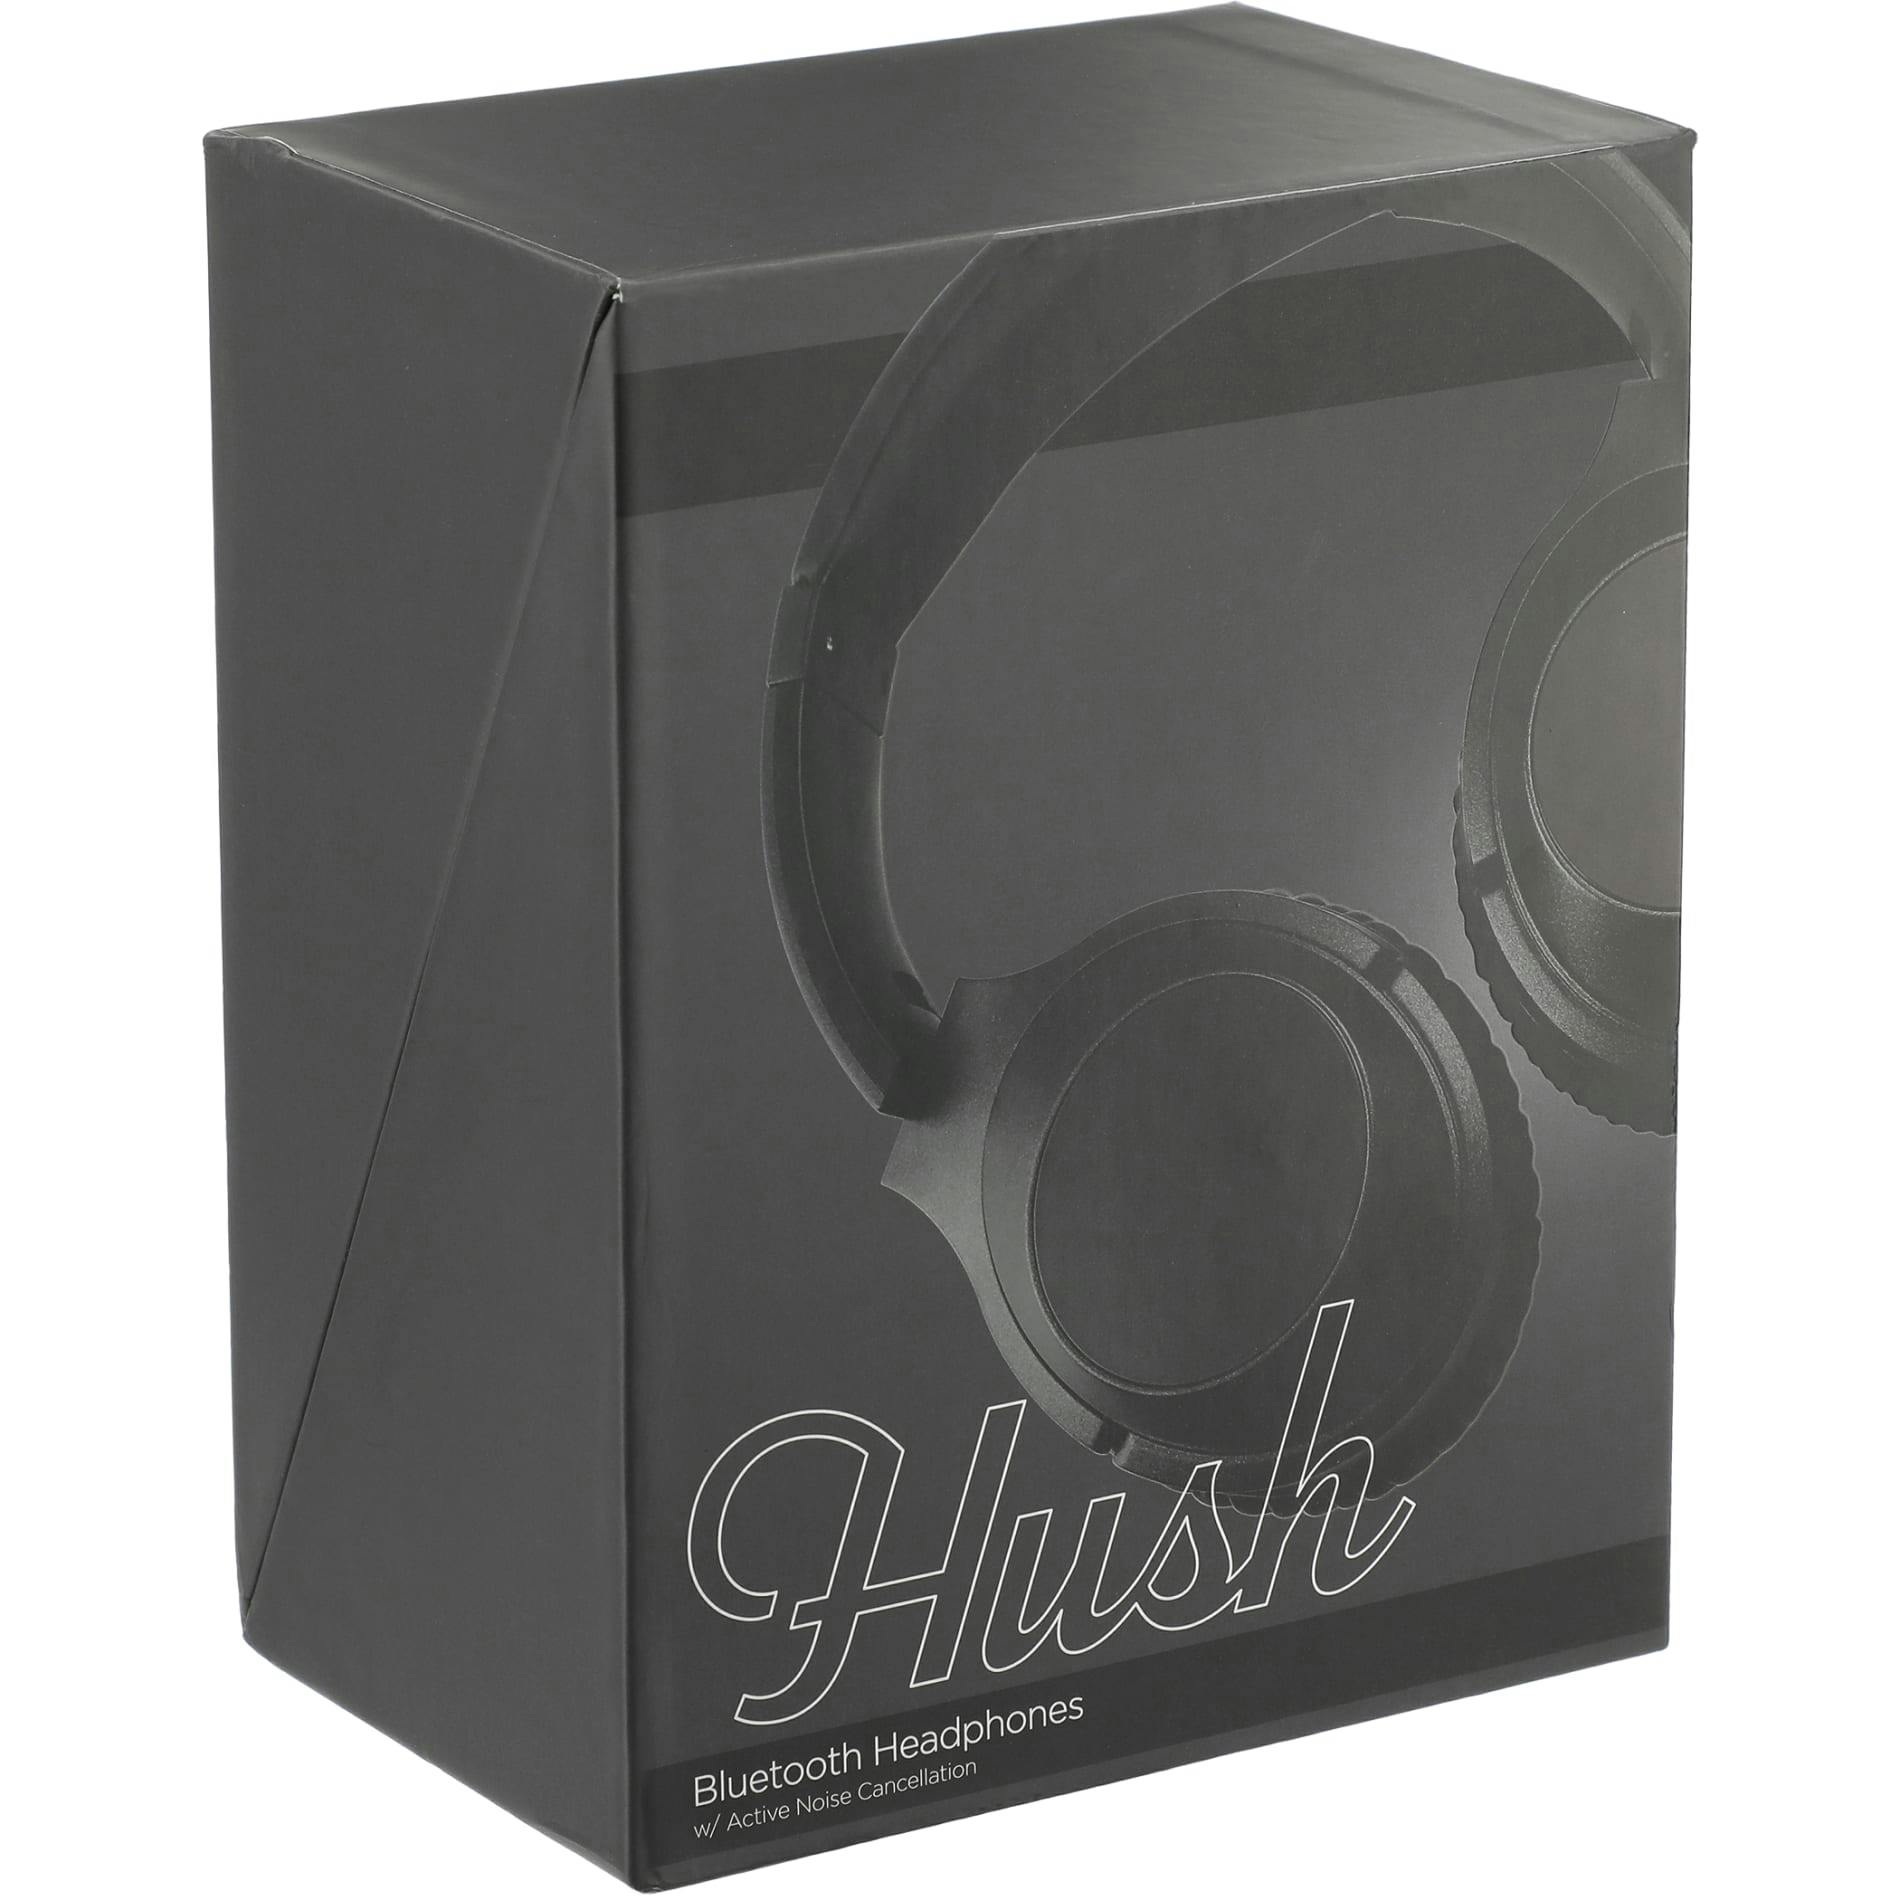 Hush Active Noise Cancellation Bluetooth Headphone - additional Image 1